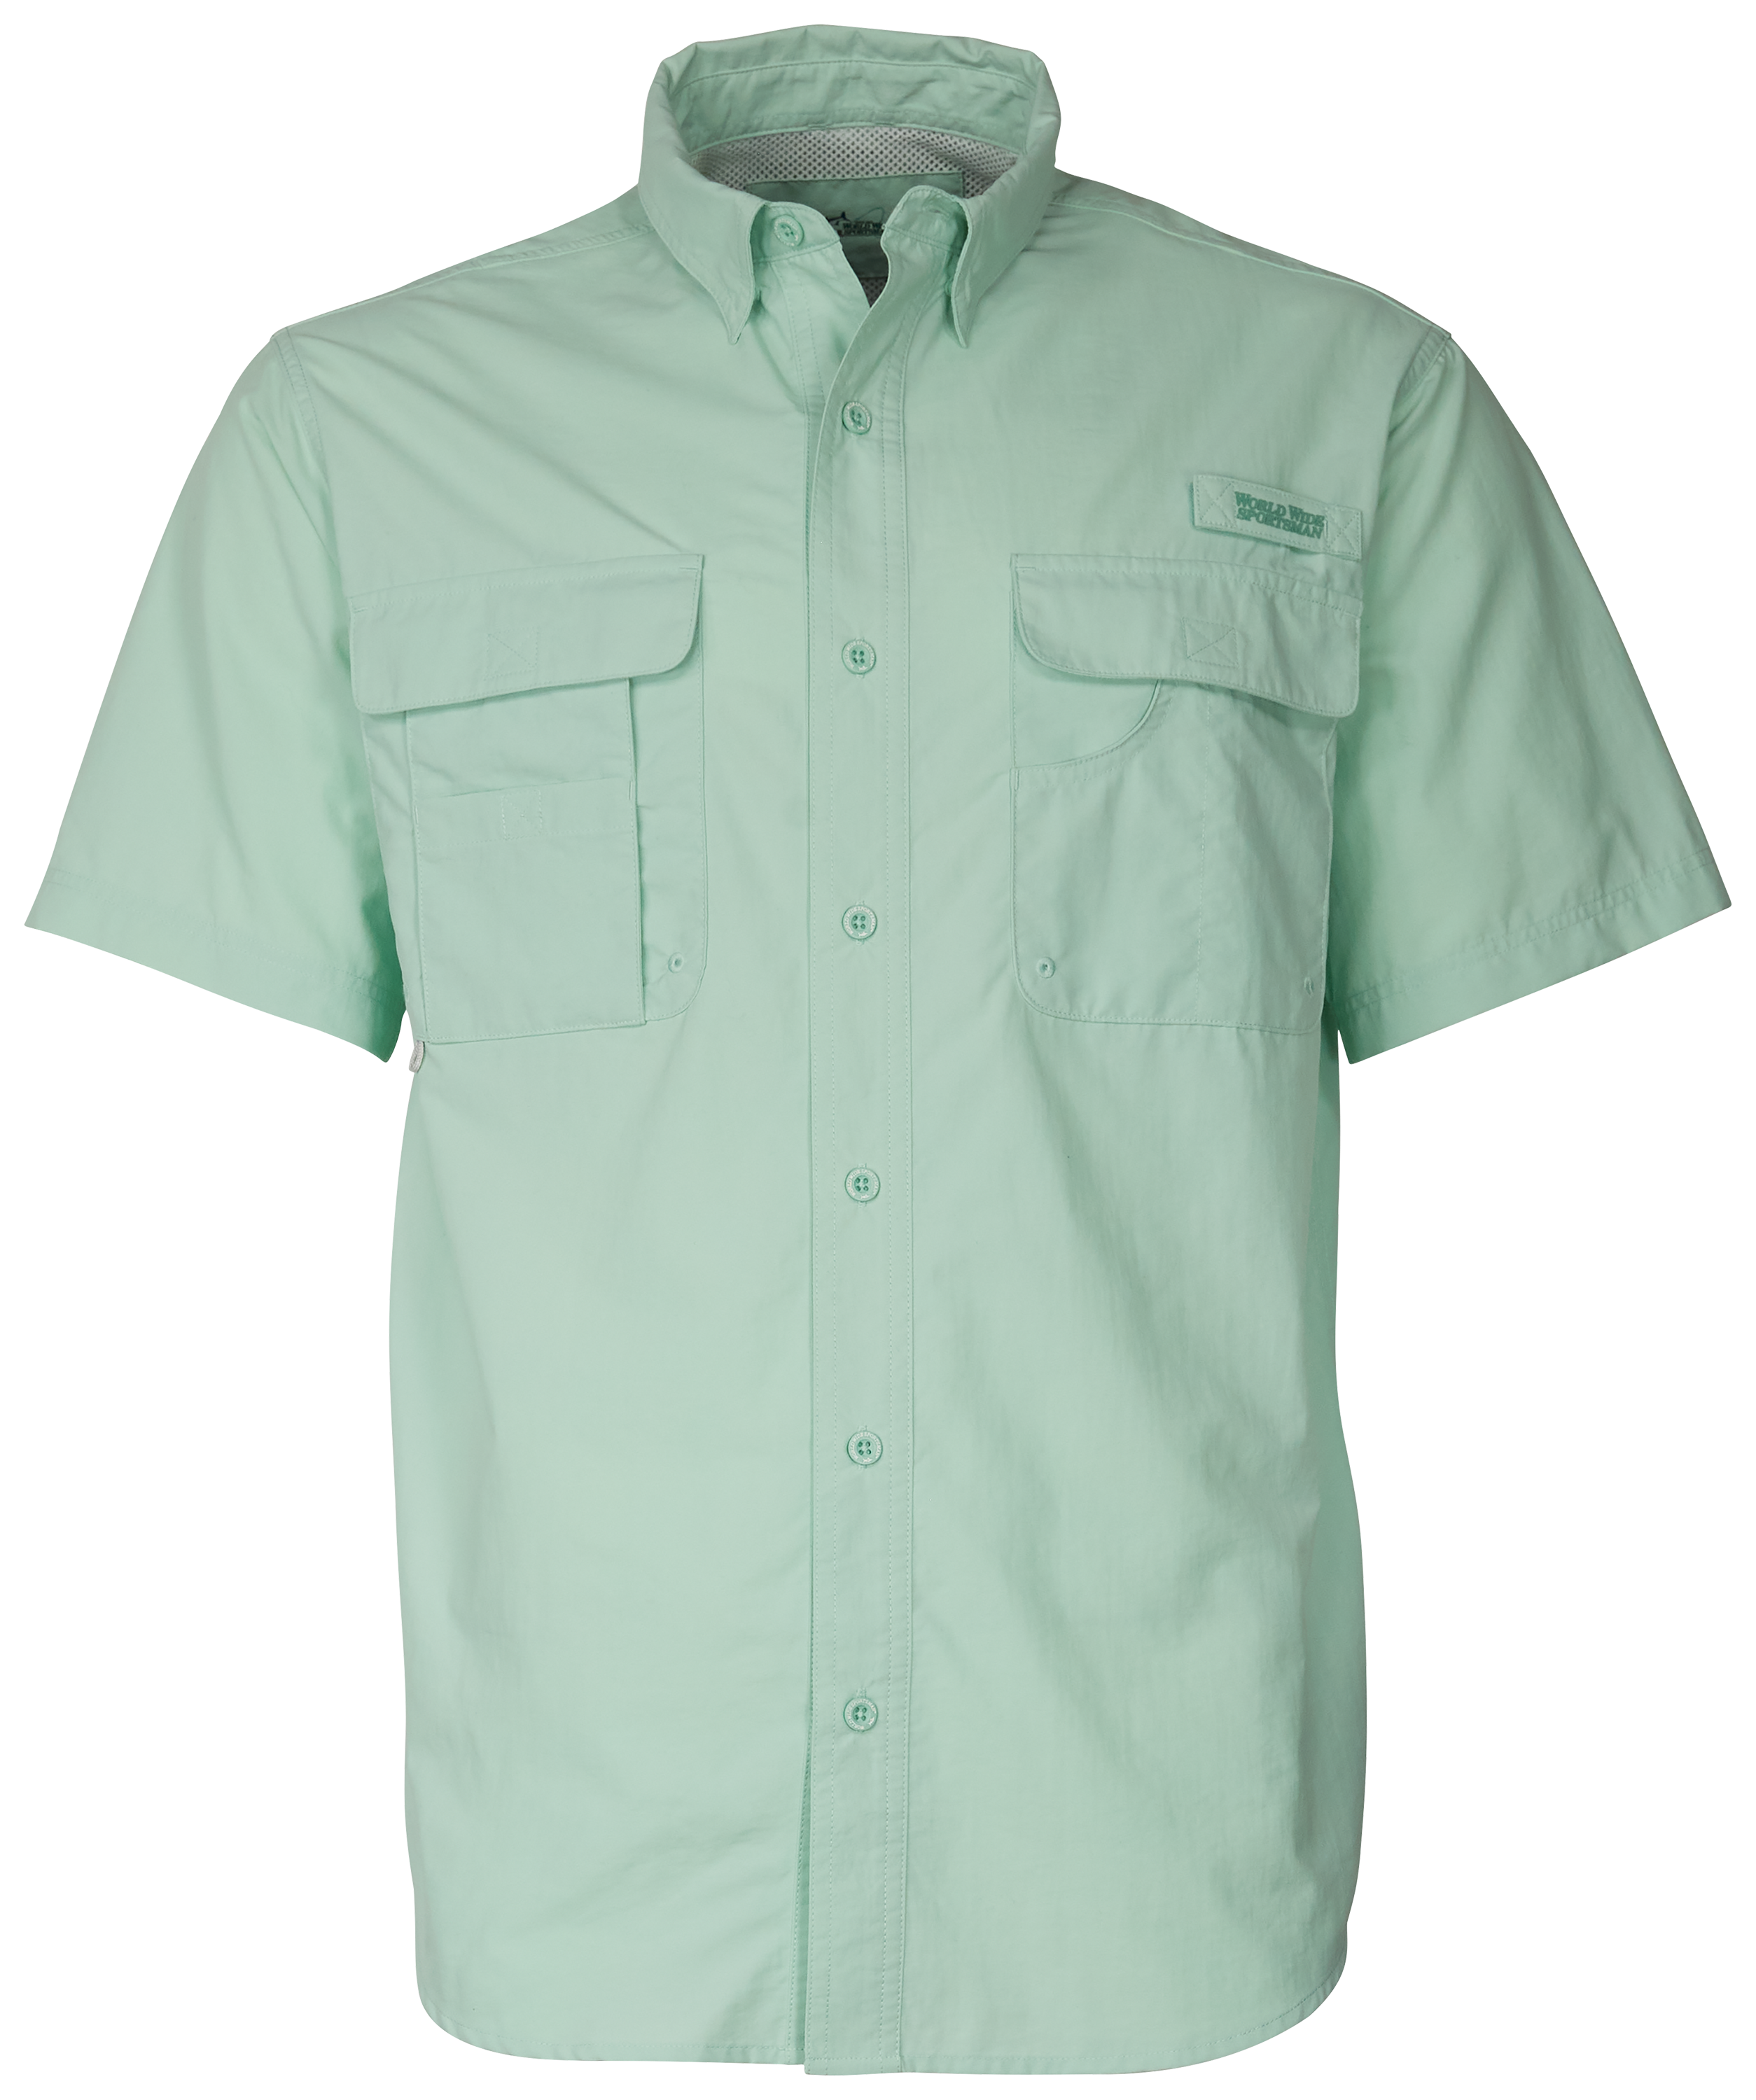 World Wide Sportsman Recycled-Nylon Angler 2.0 Short-Sleeve Button-Down Shirt for Men - Lichen - 4XL